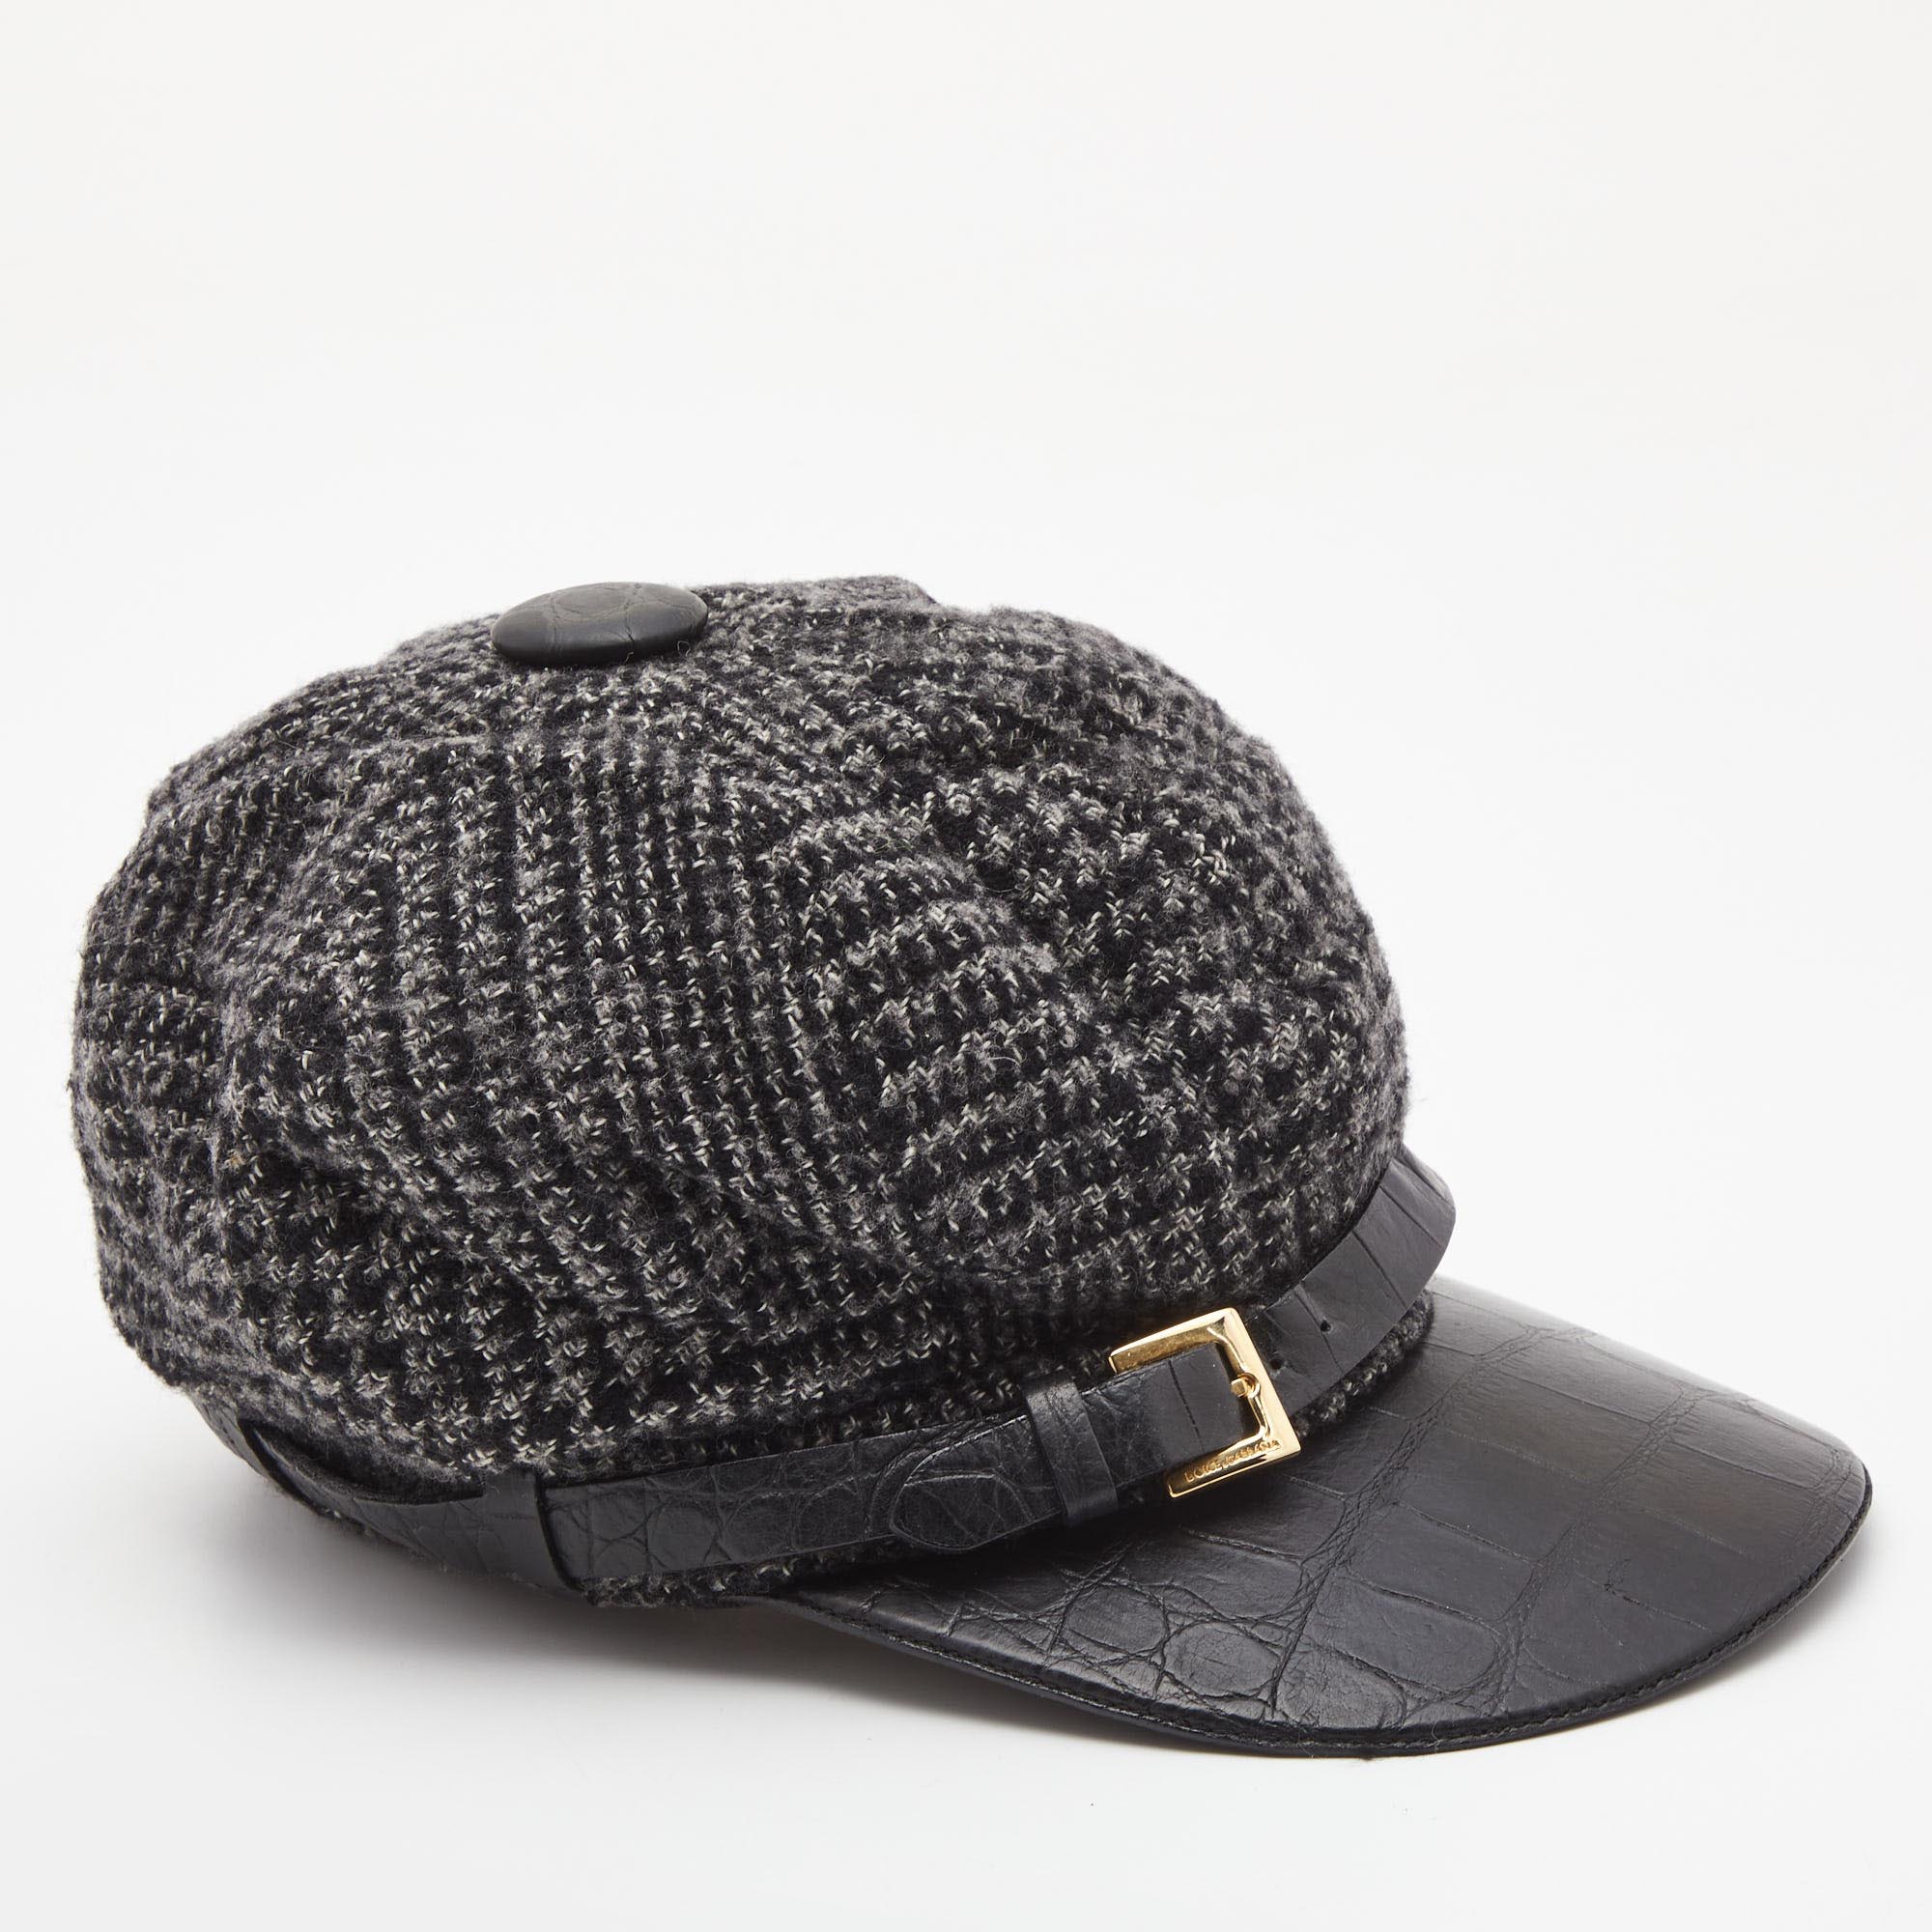 Dolce & gabbana black wool knit croc embossed leather baseball cap size 57